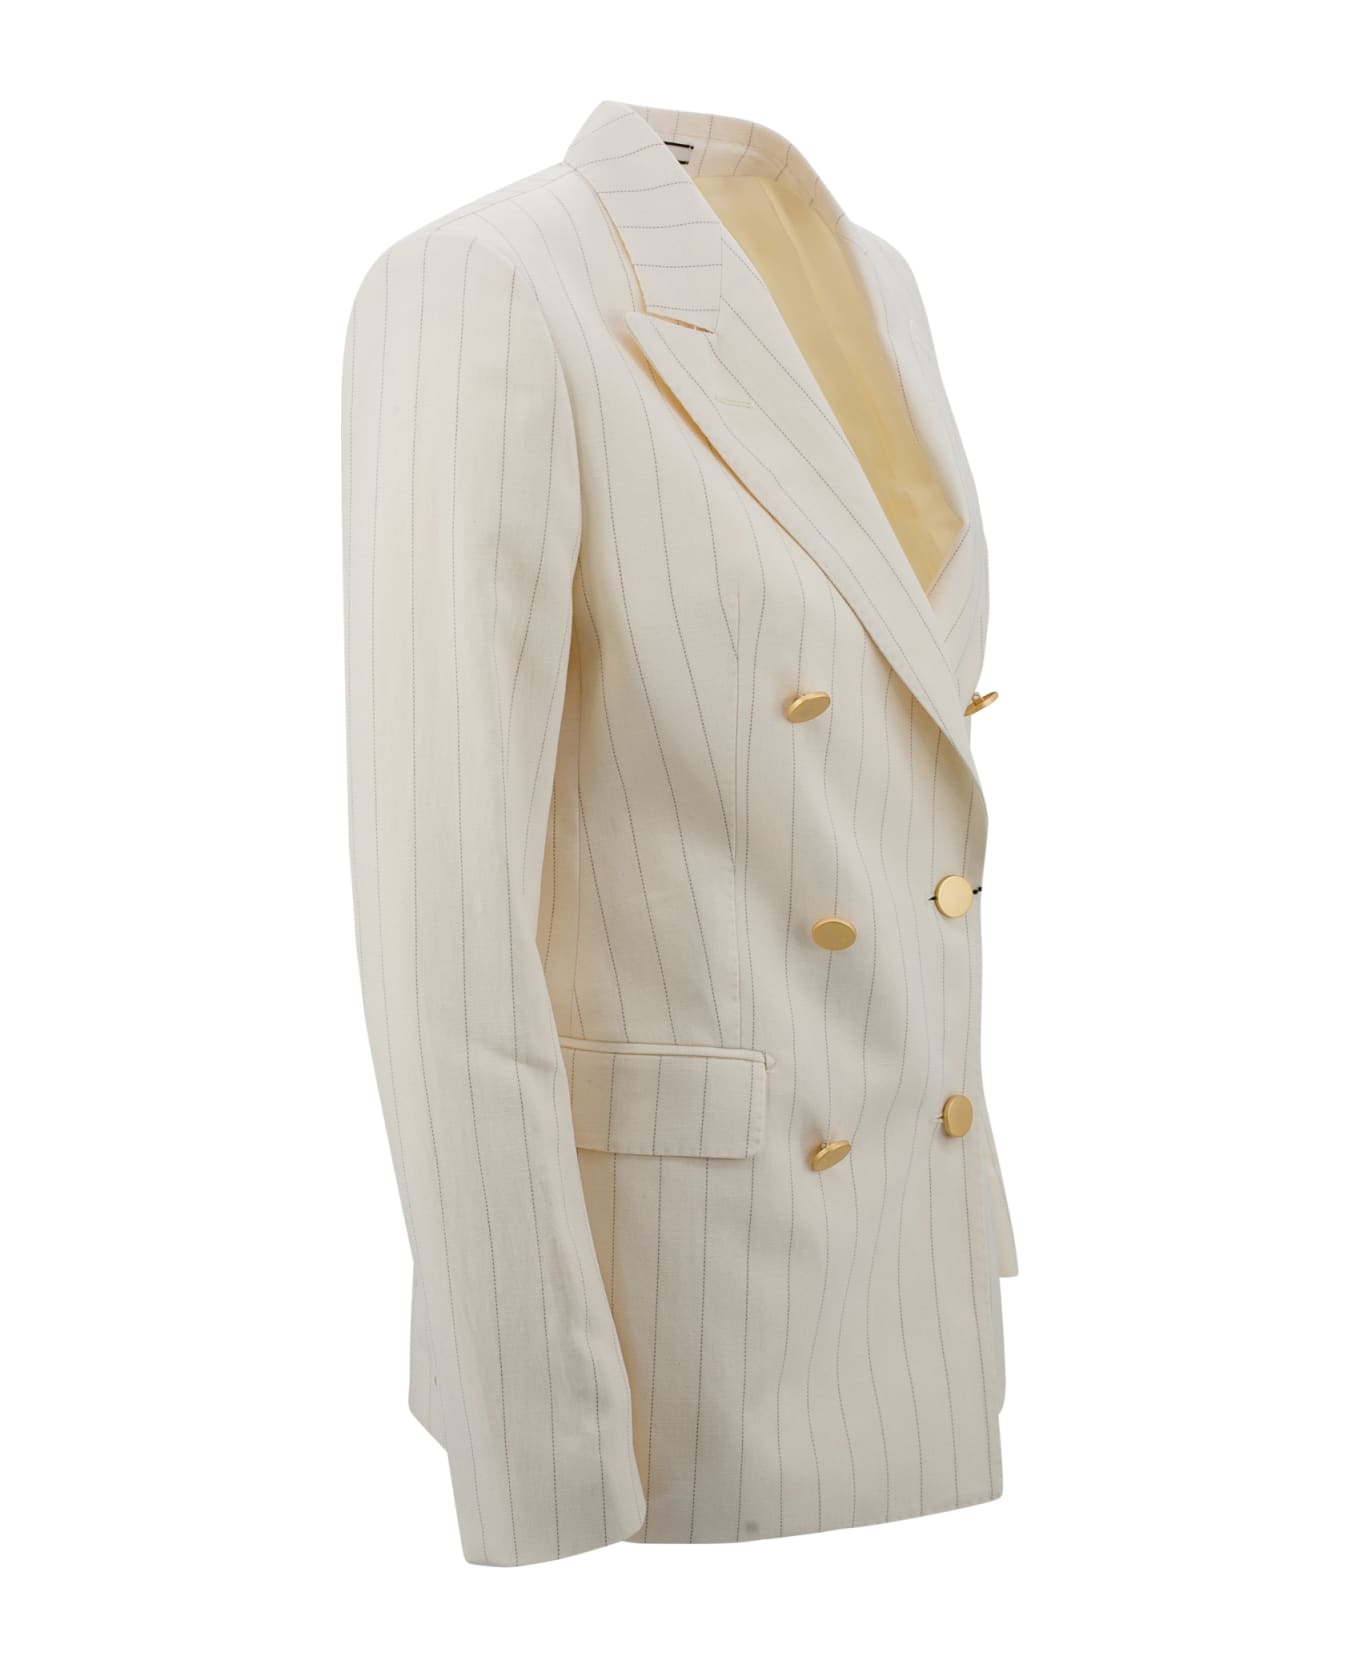 Tagliatore Double-breasted Linen Suit - White